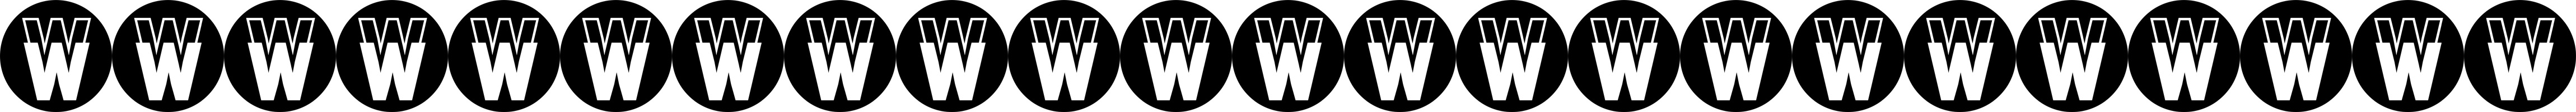 Women in Widescreen logo